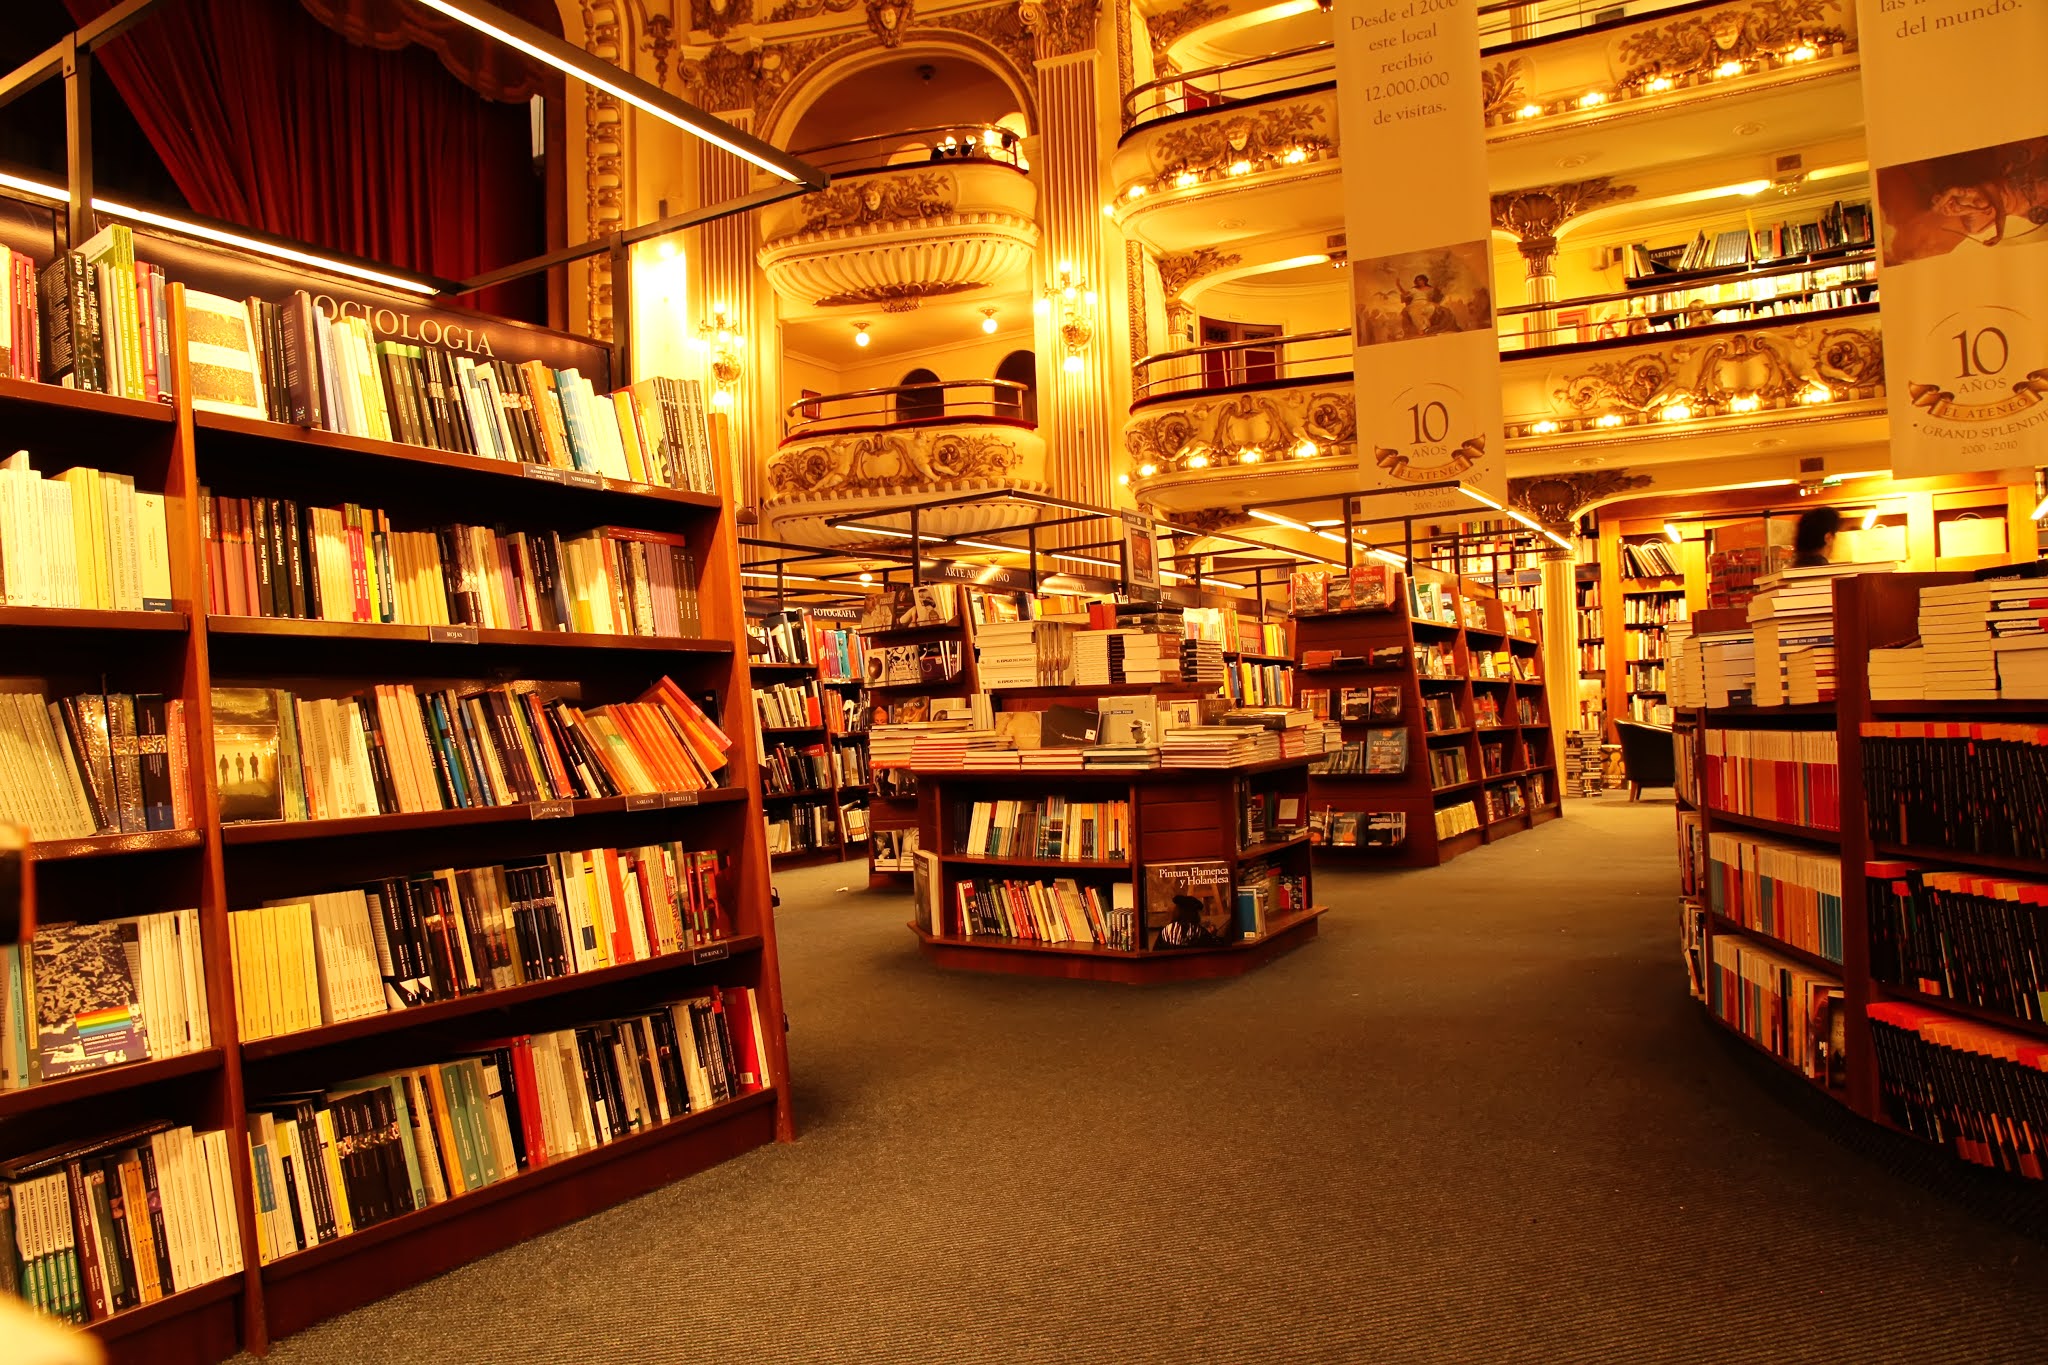 Books are in my life. Картинки bookstore. Фото логотип библиотеки. Book shop Interior. Book shop images.